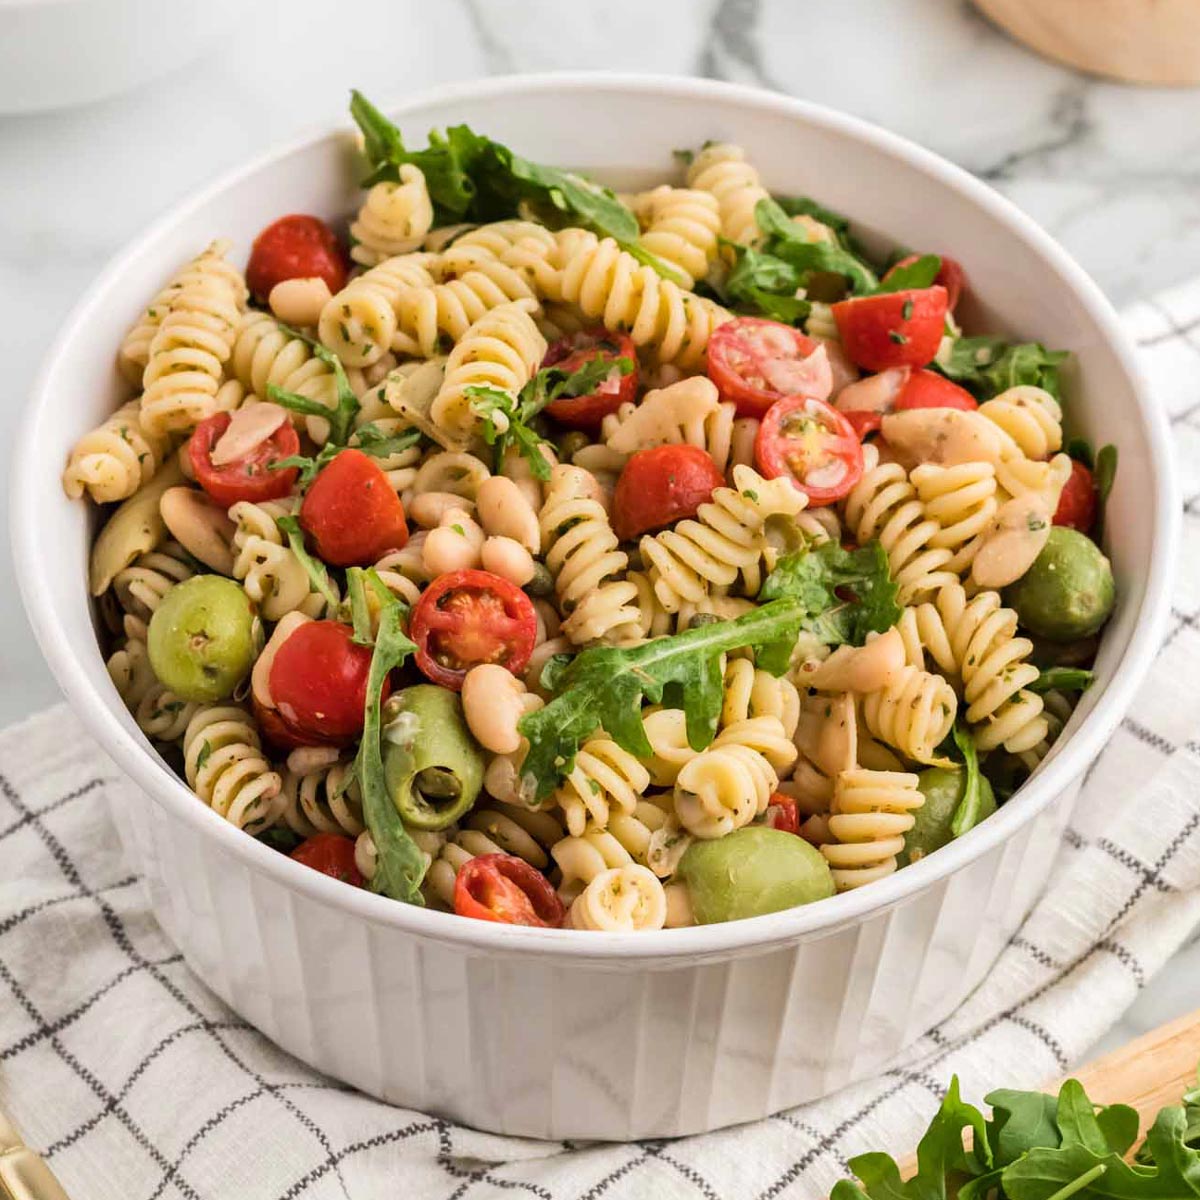 Cold Zesty Italian Pasta Salad Recipe | Vegetarian & Easy to Make!